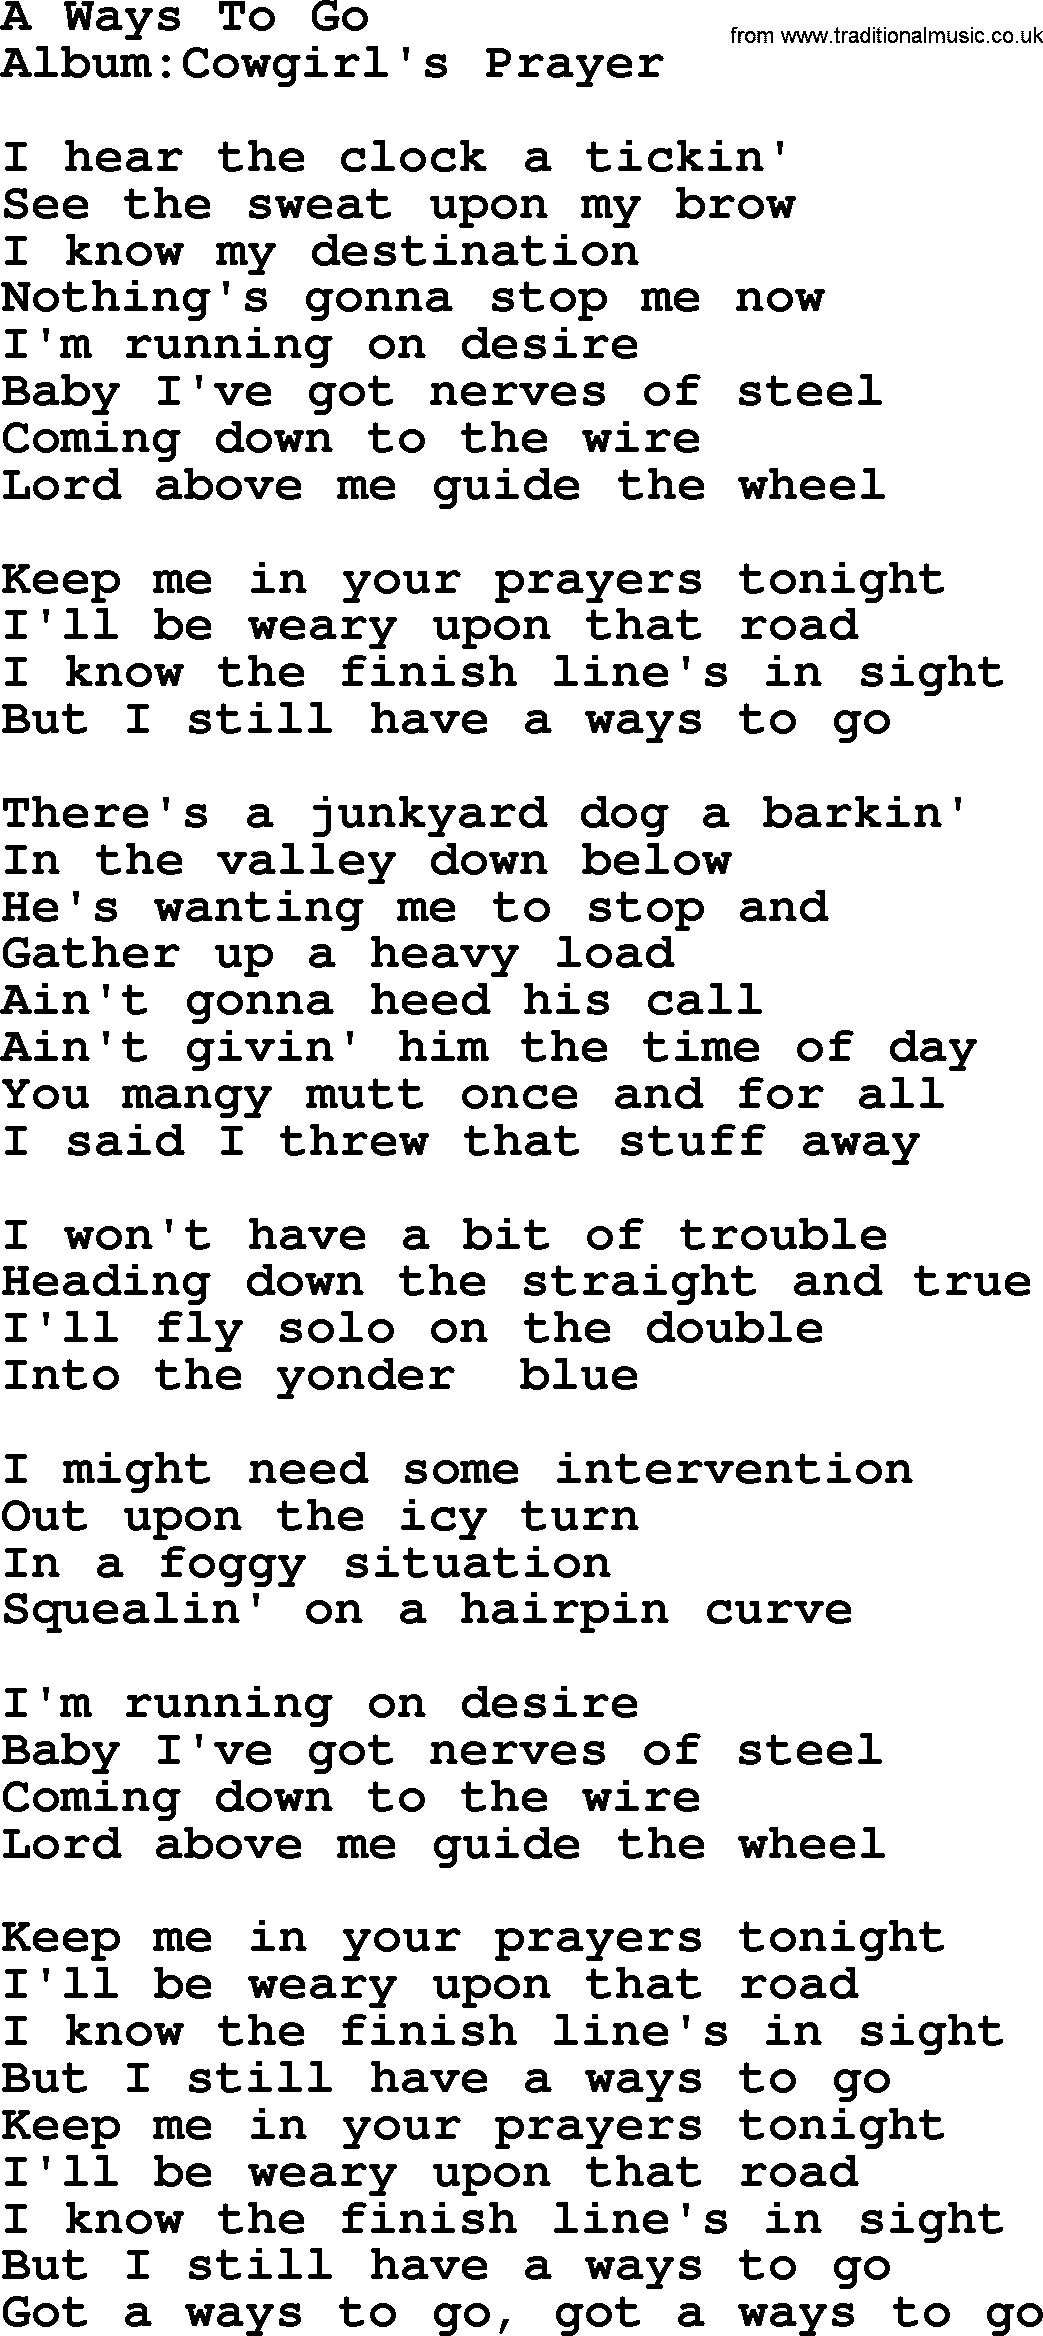 Emmylou Harris song: A Ways To Go lyrics